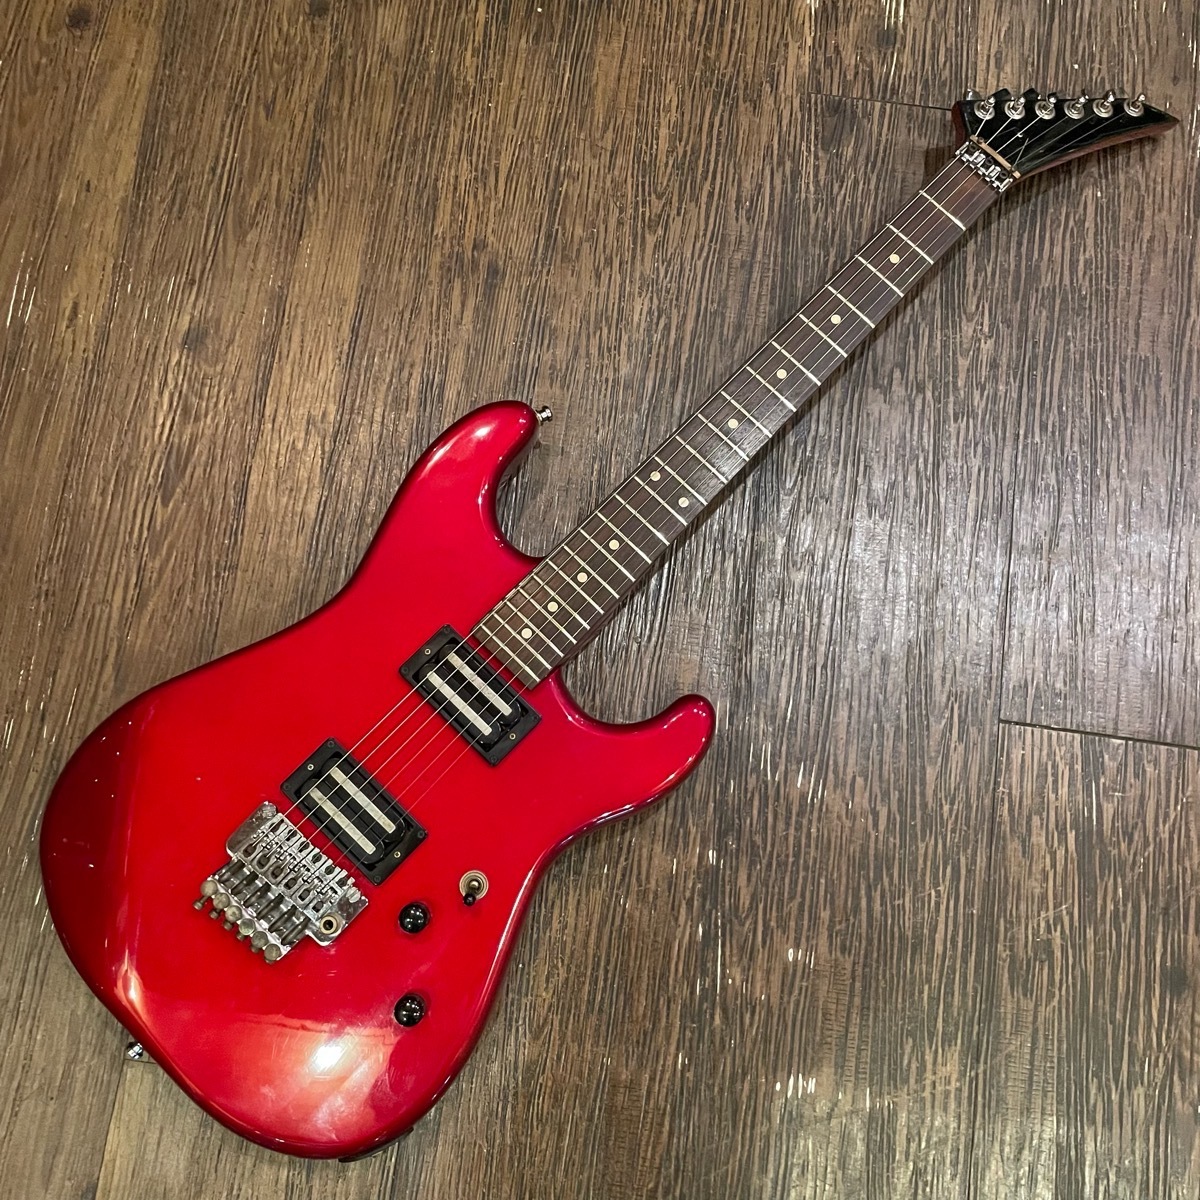 No Brand Stratocaster Type Electric Guitar エレキギター フロイドローズ -GrunSound-x932-